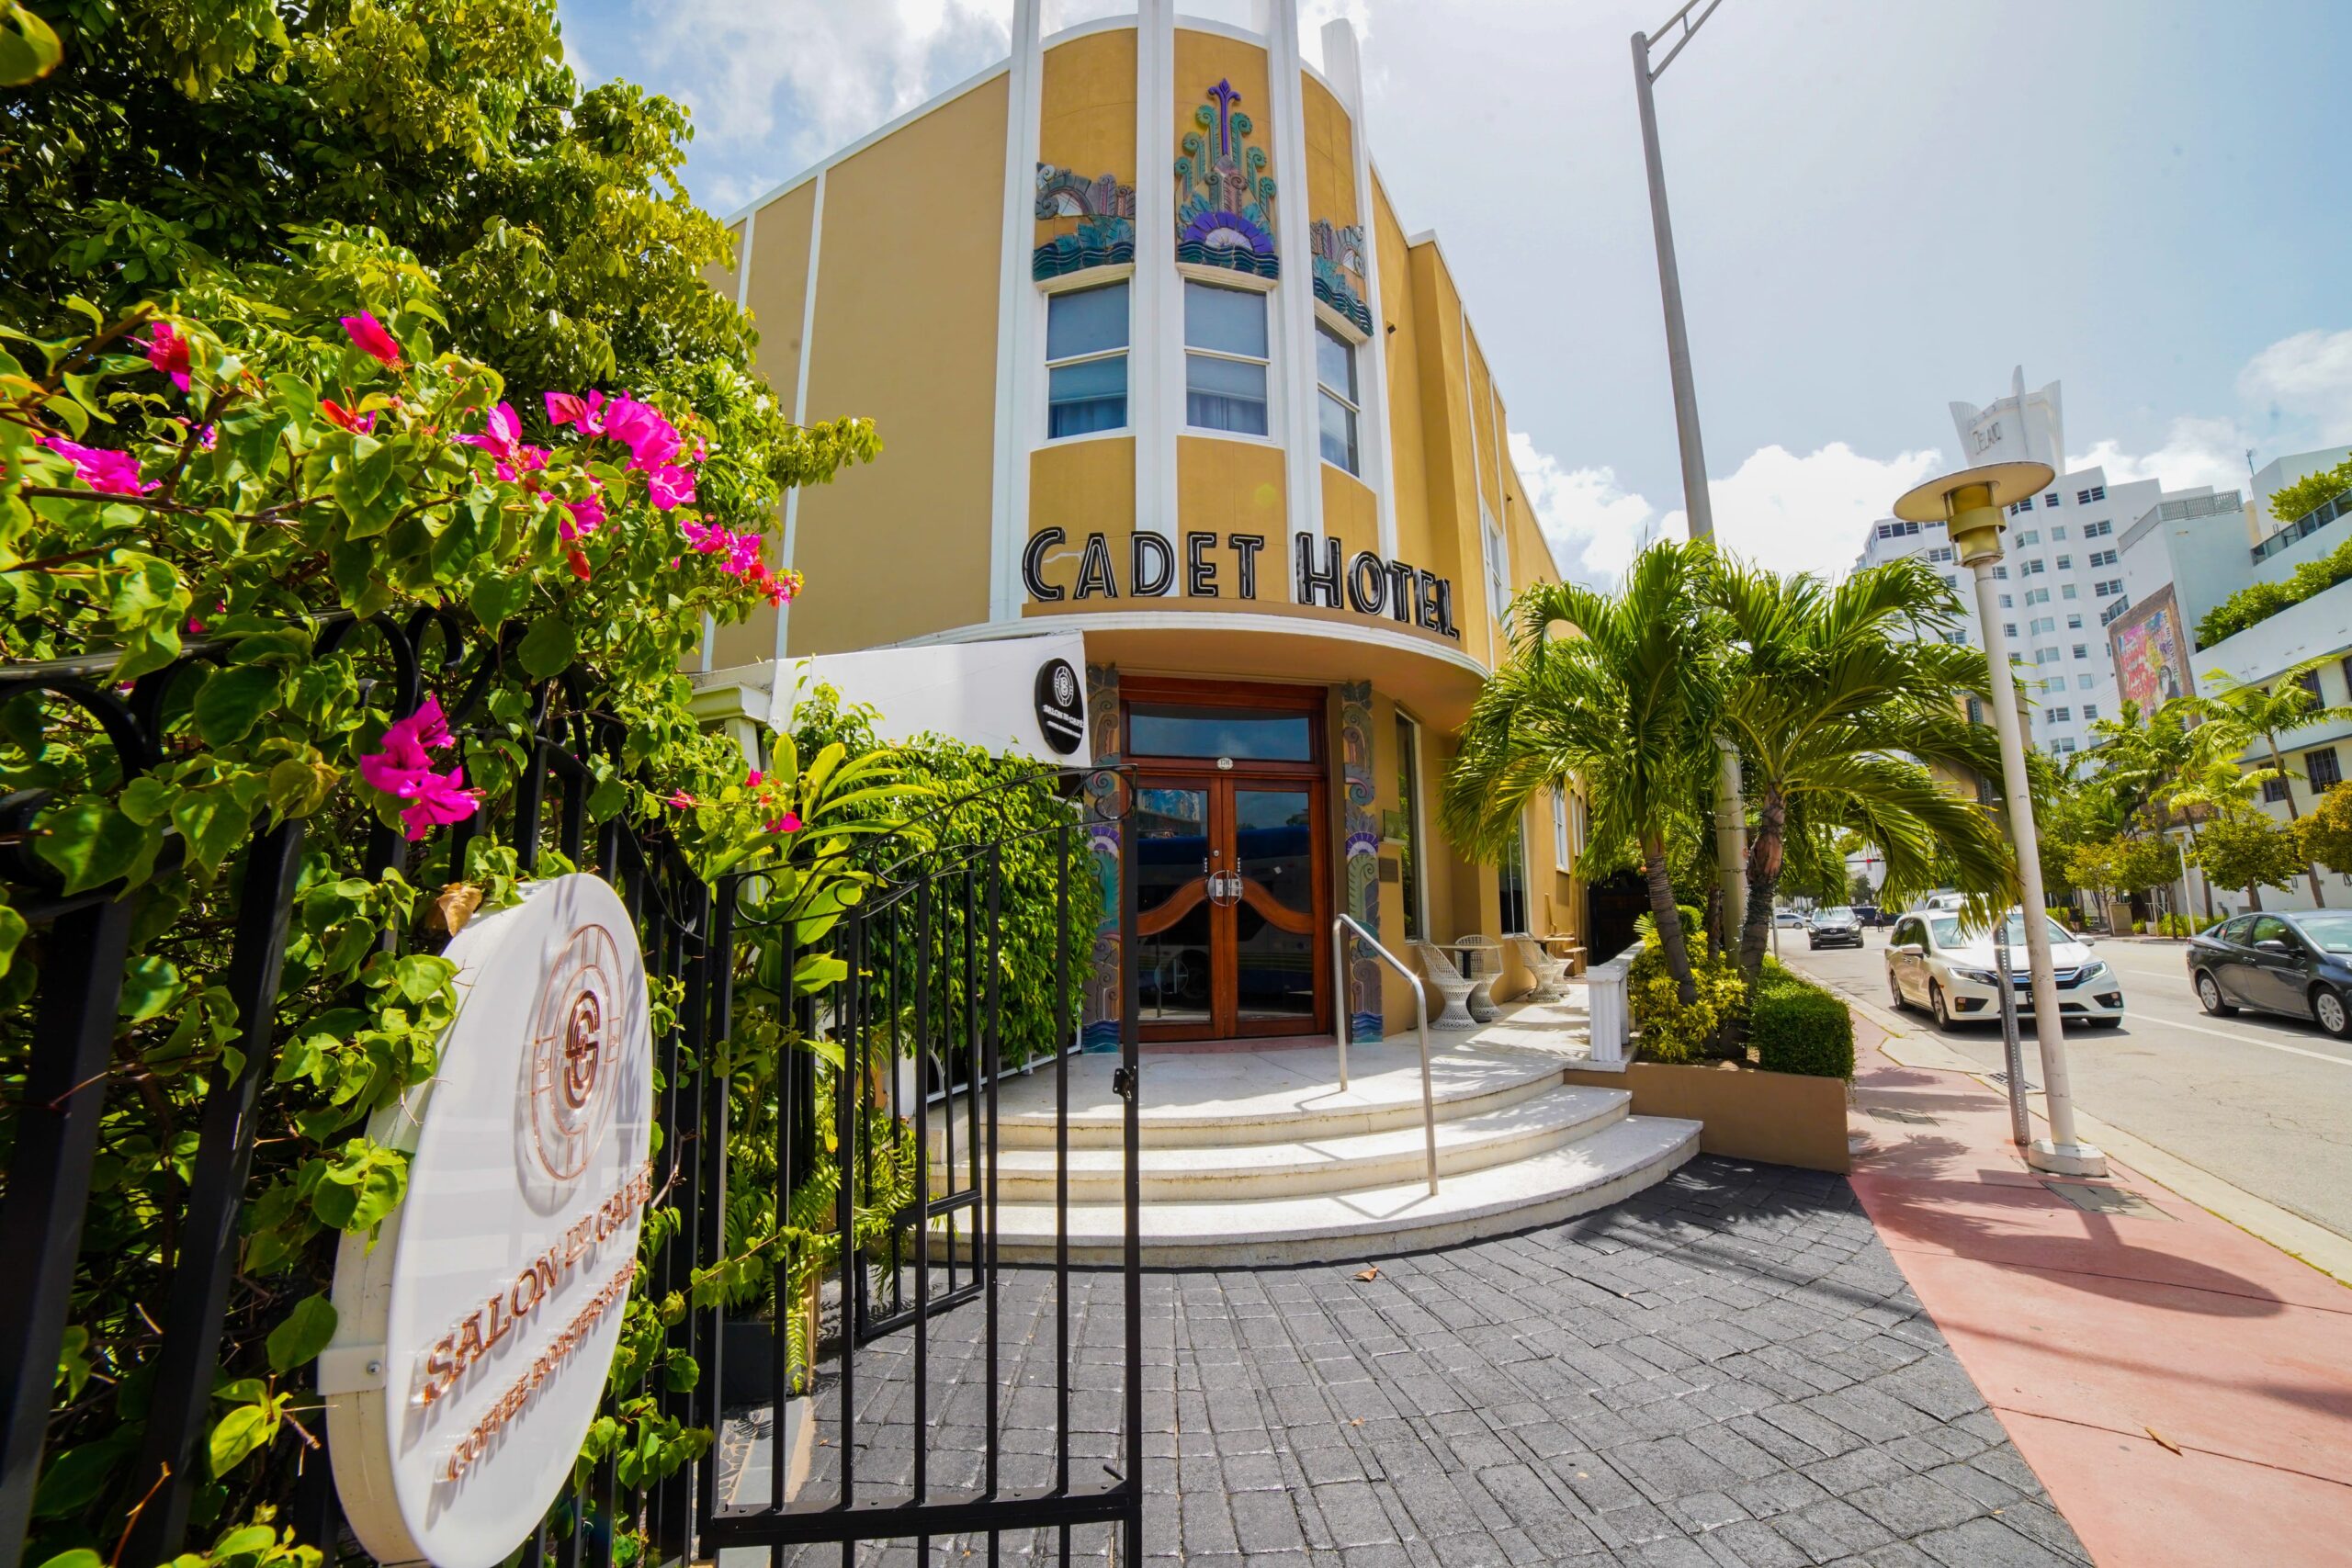 Cadet Hotel Entrance